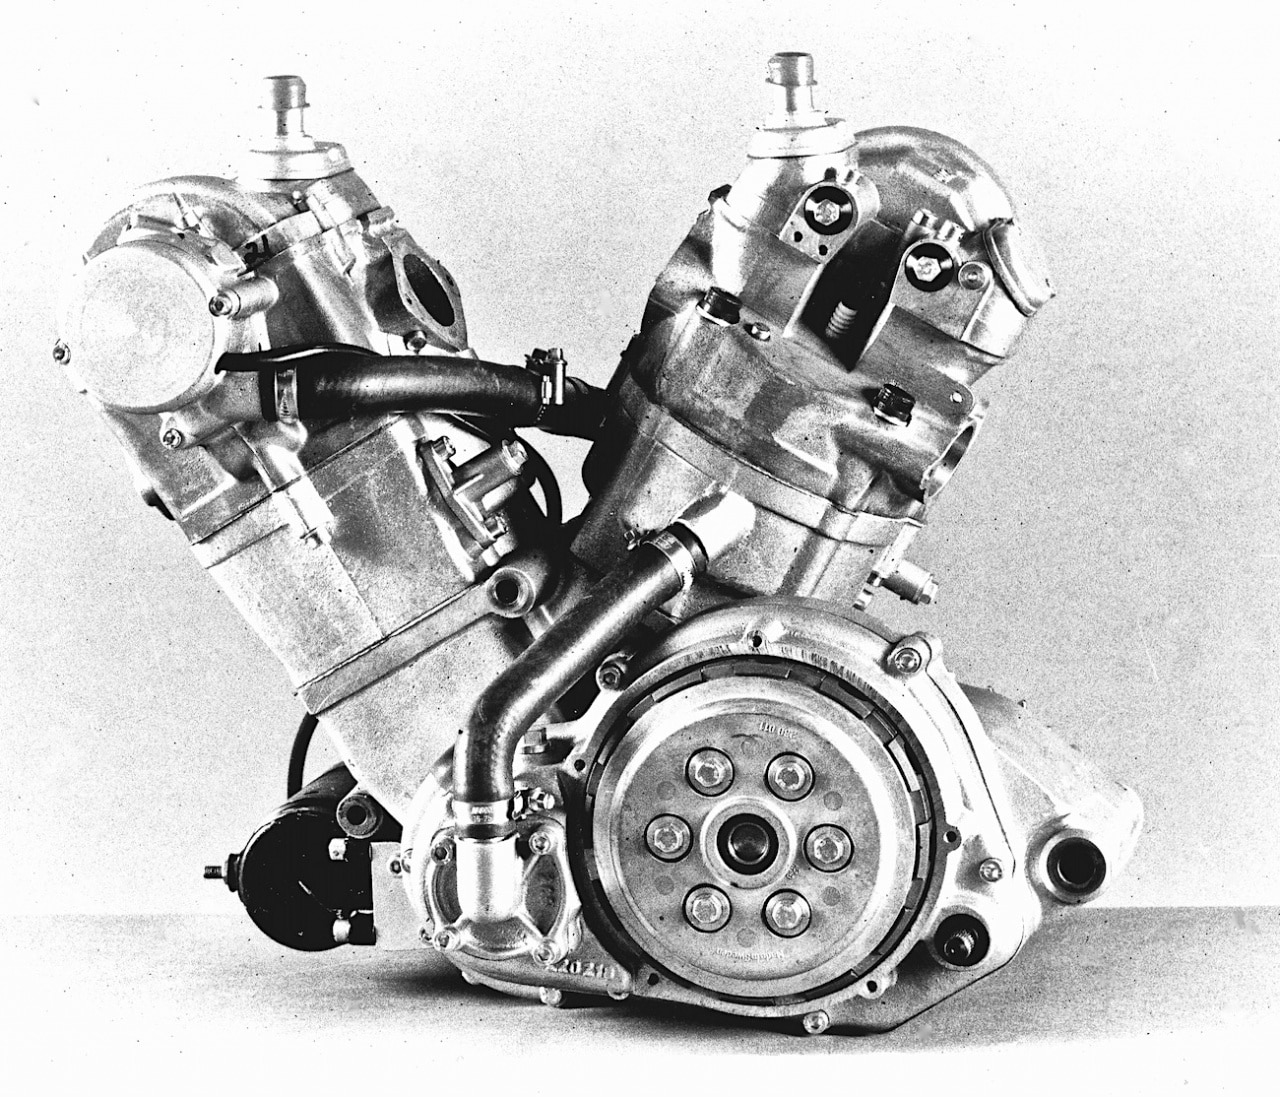 450cc dirt bike engine